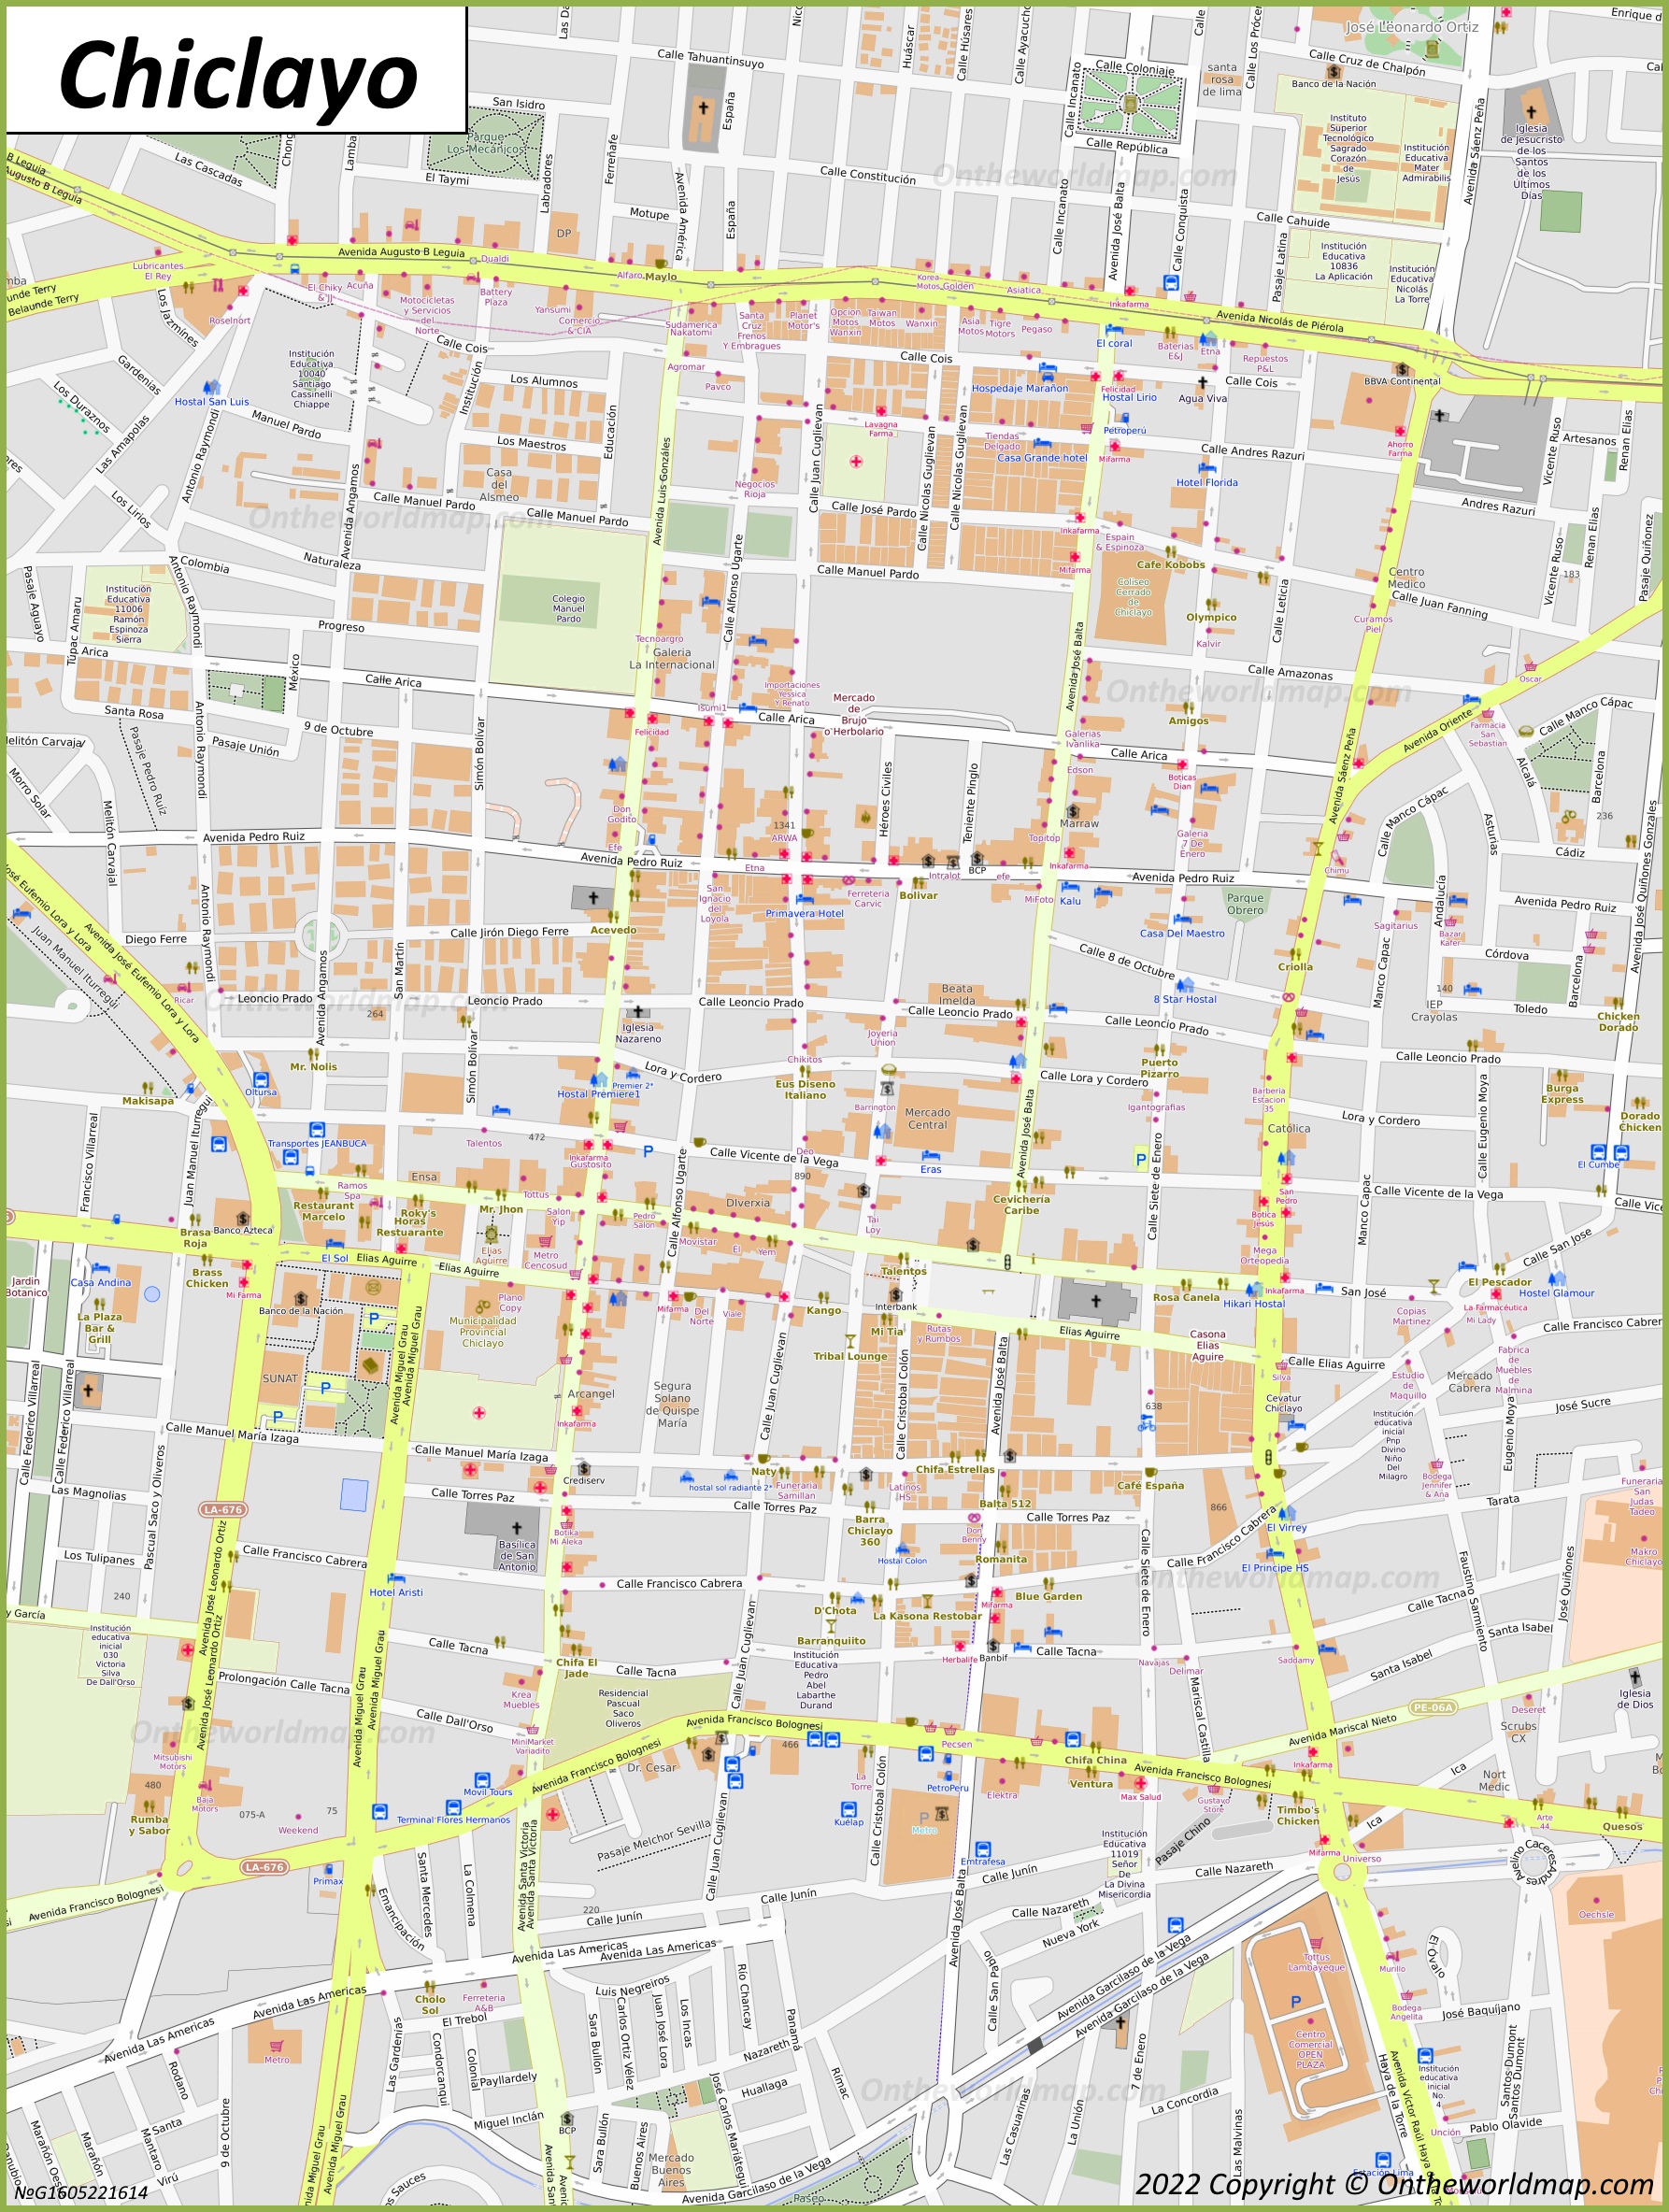 Chiclayo City Centre Map